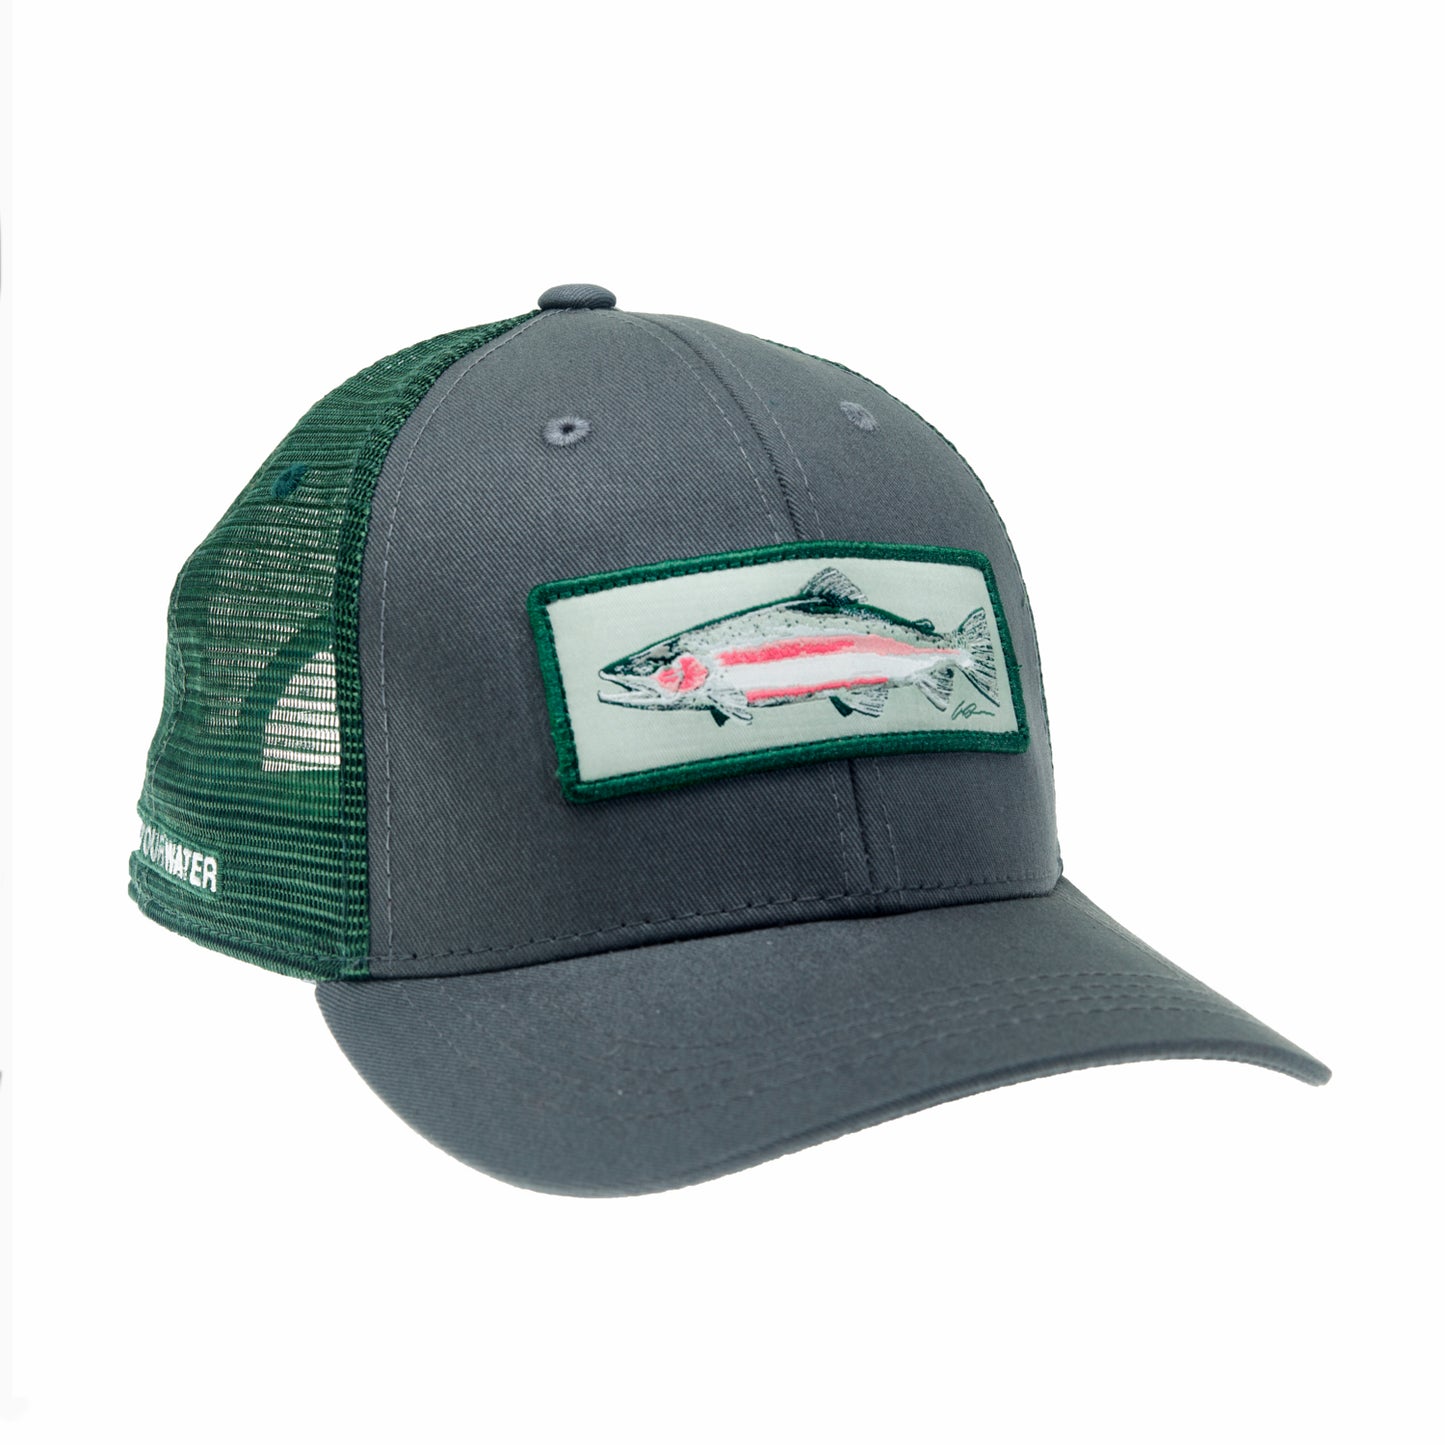 RepYourWater Winter Run Steel Hat St Gray/Green